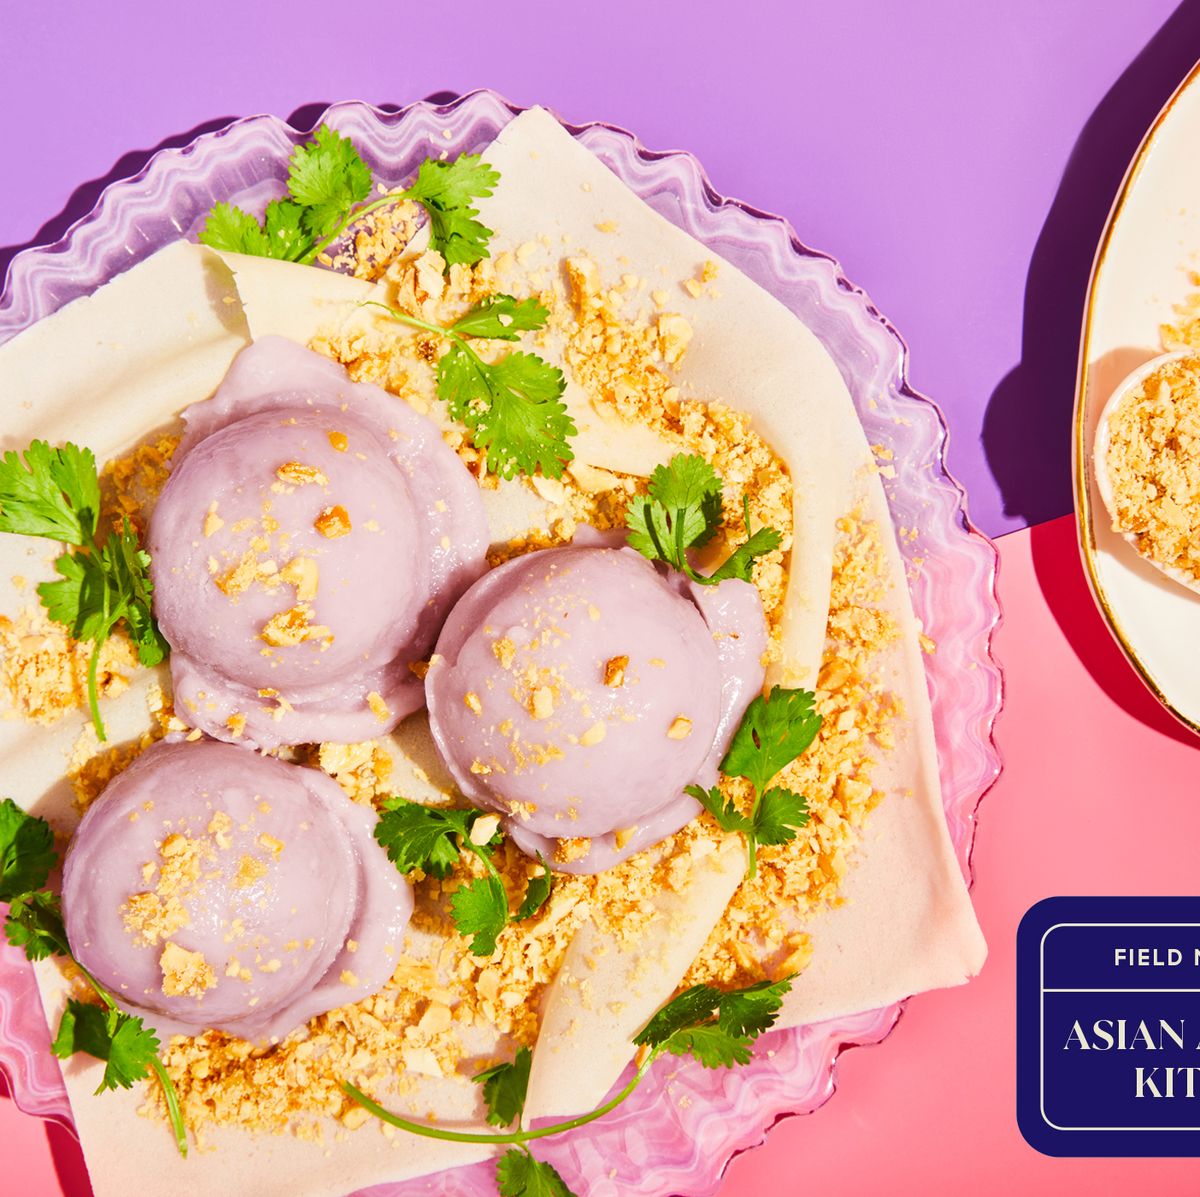 What are Ice Cream Rolls made of? Famous Thai Ice Cream Rolls